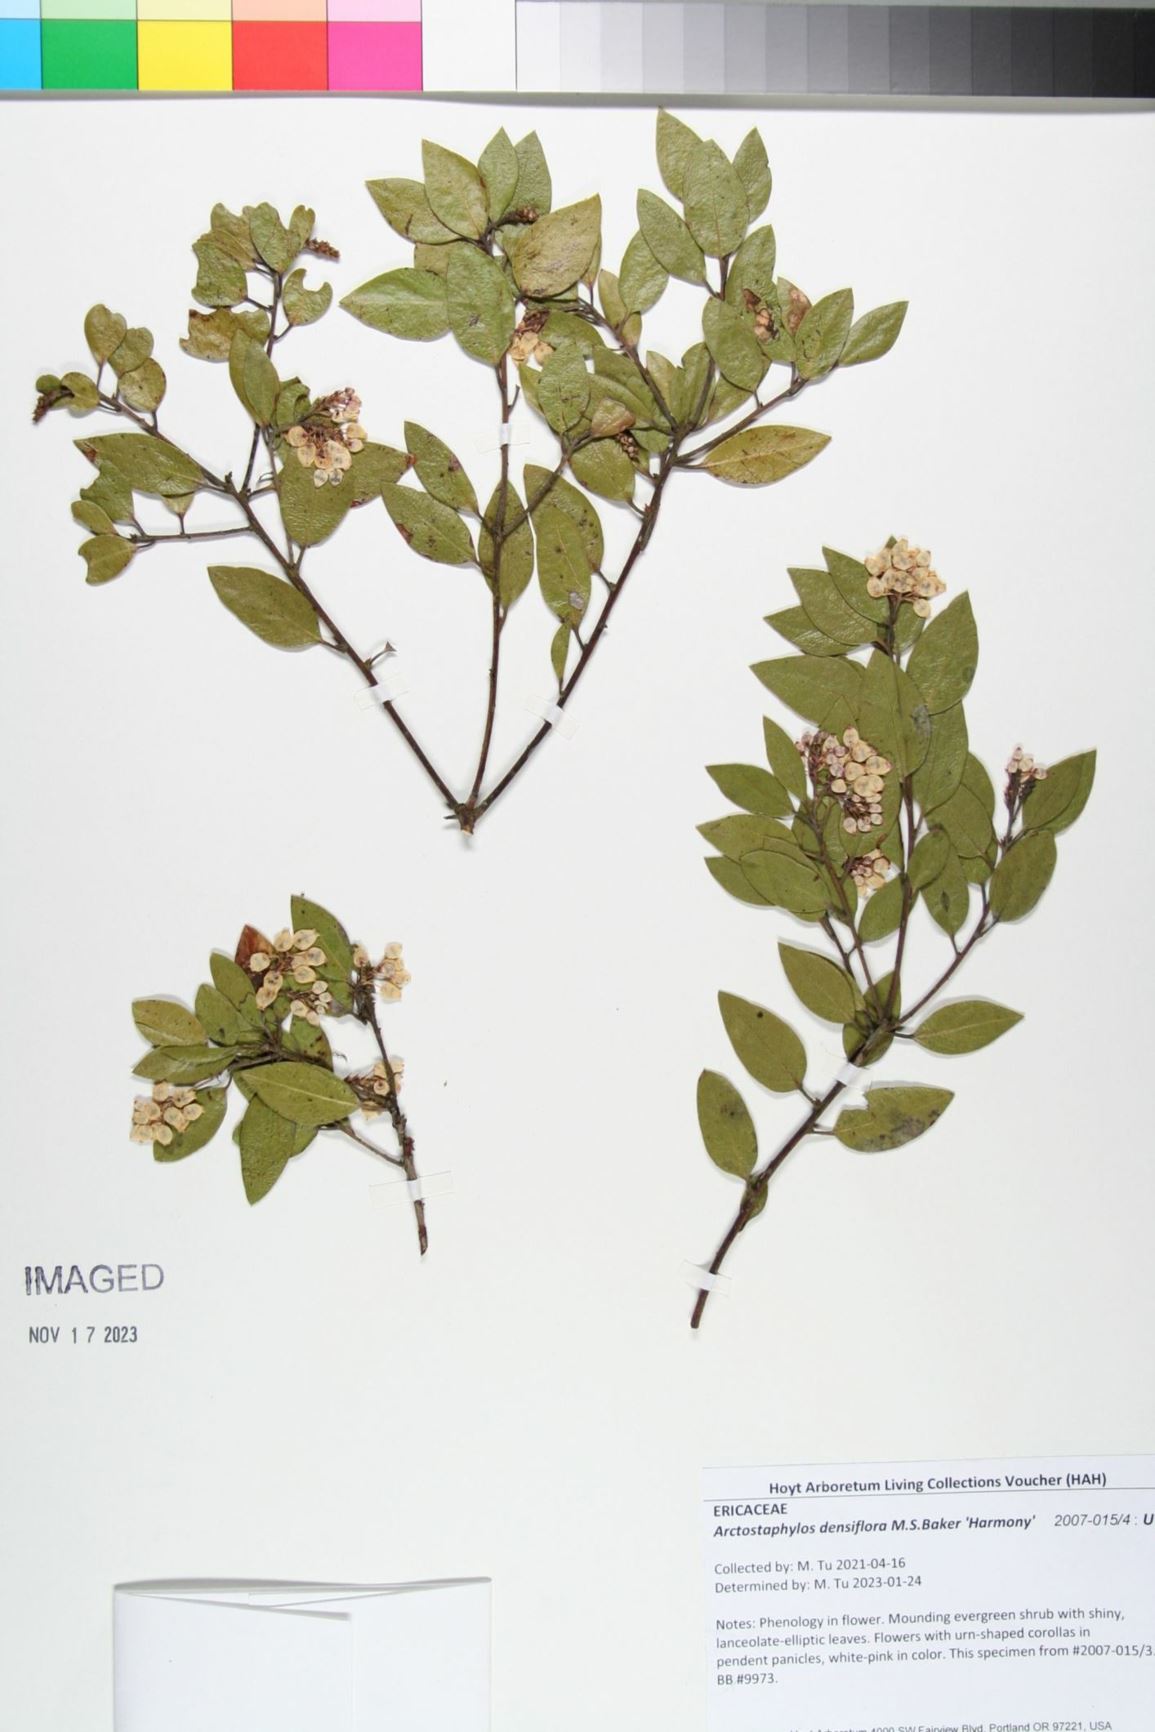 Arctostaphylos densiflora 'Harmony' - Vine Hill manzanita